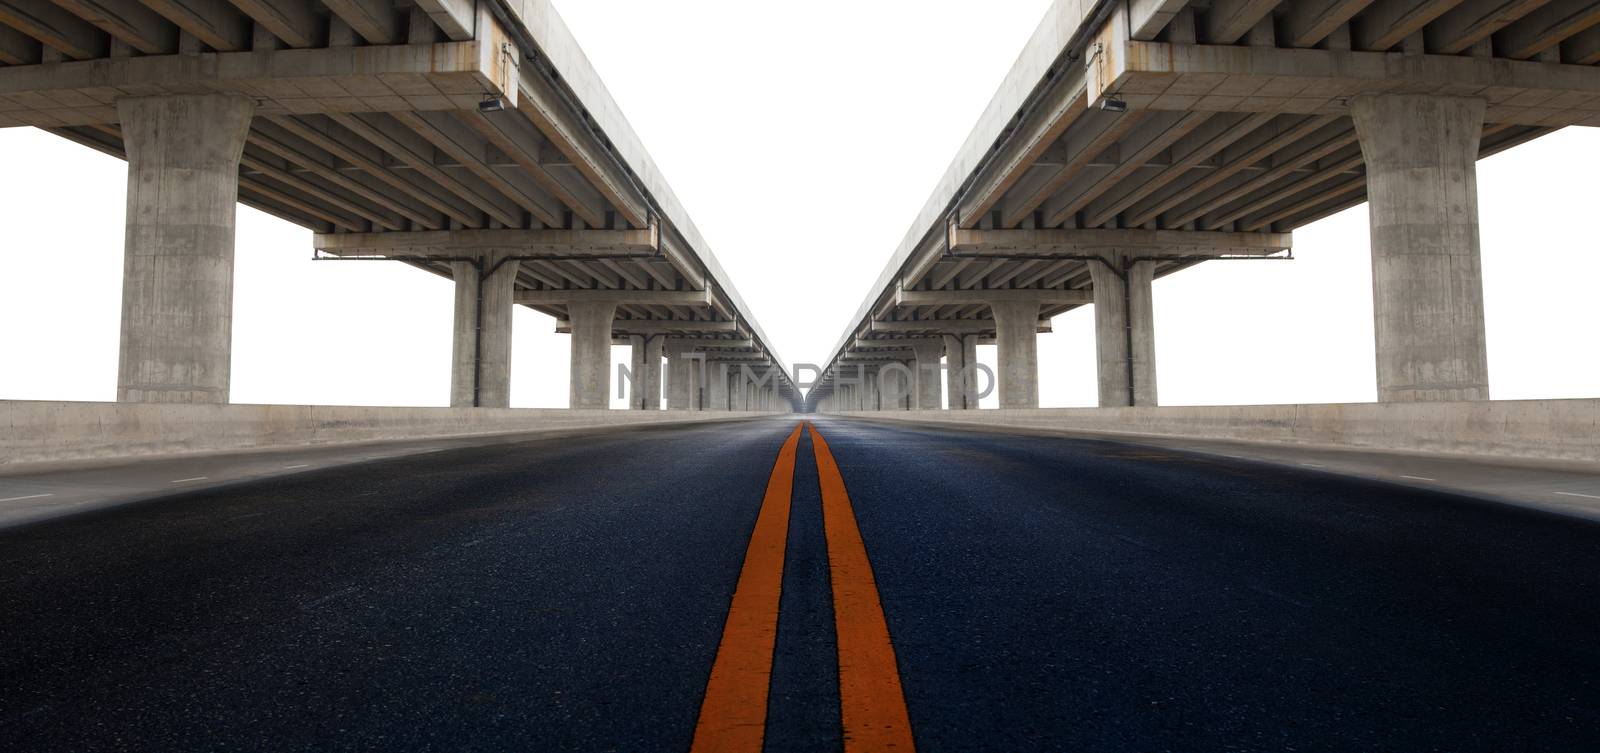 perspective on bridge ram construction and asphalt raod isolated by khunaspix